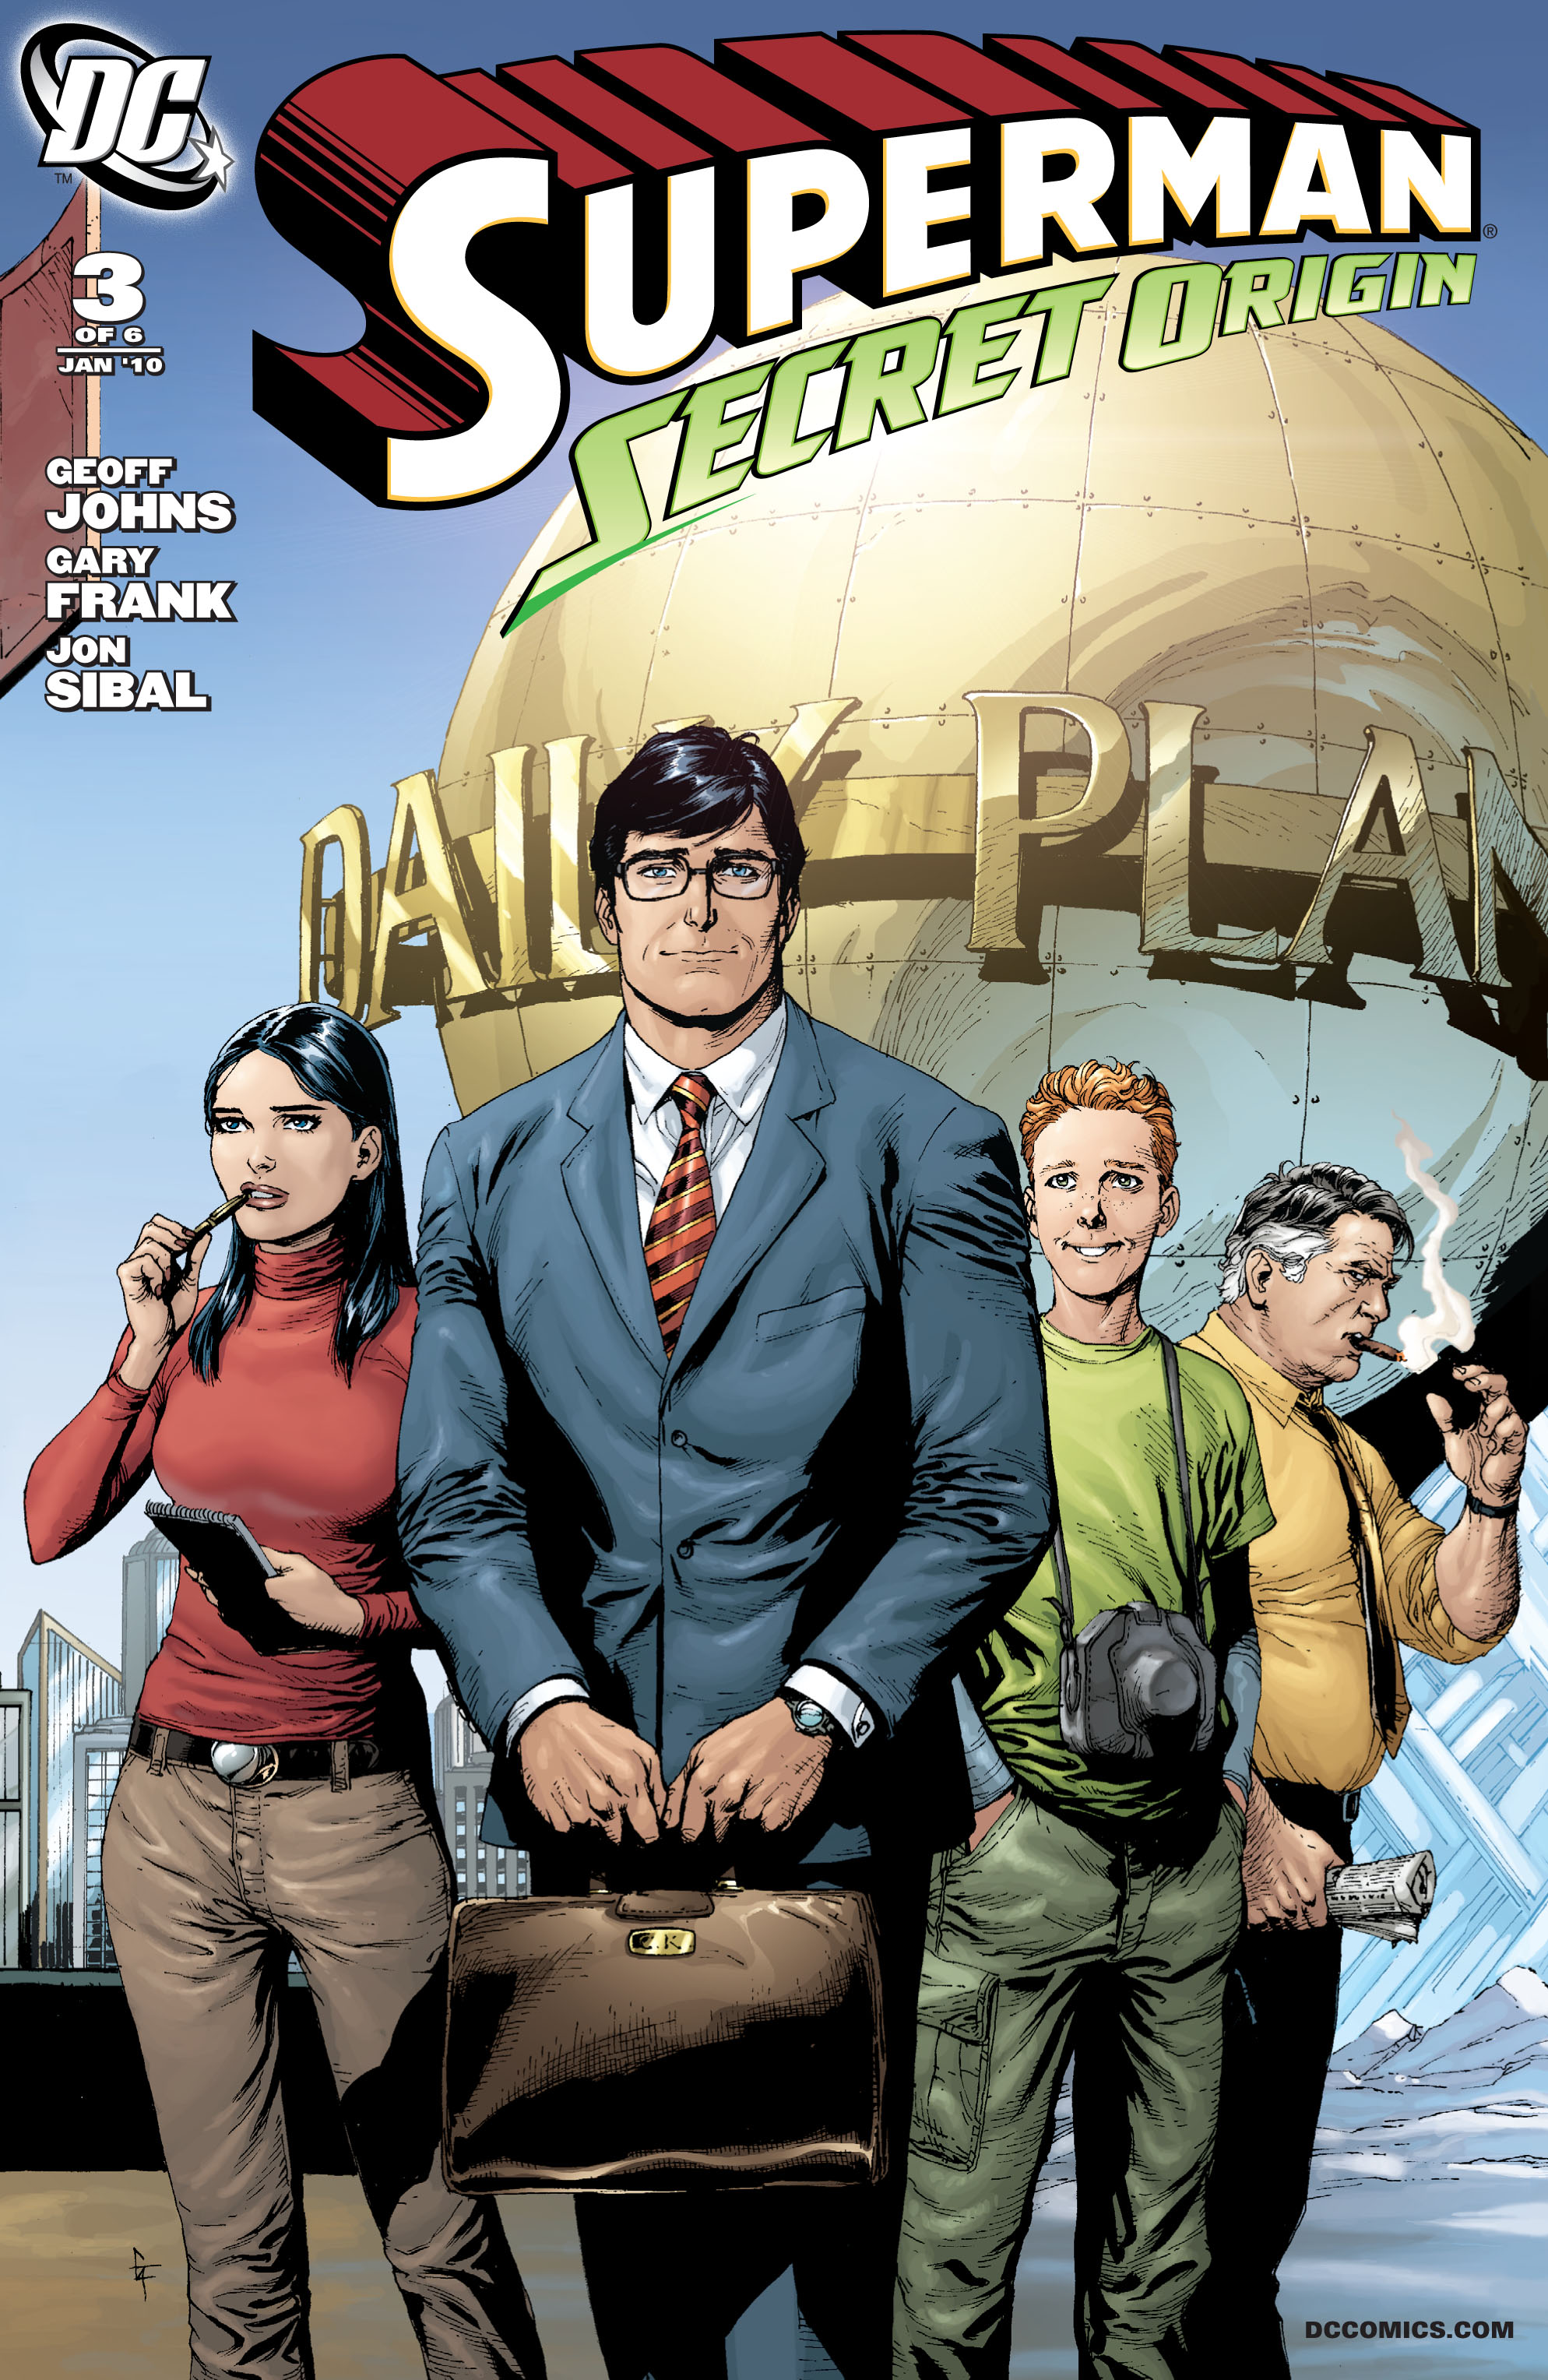 Superman Secret Origin Issue 3 | Read Superman Secret Origin Issue 3 comic  online in high quality. Read Full Comic online for free - Read comics  online in high quality .